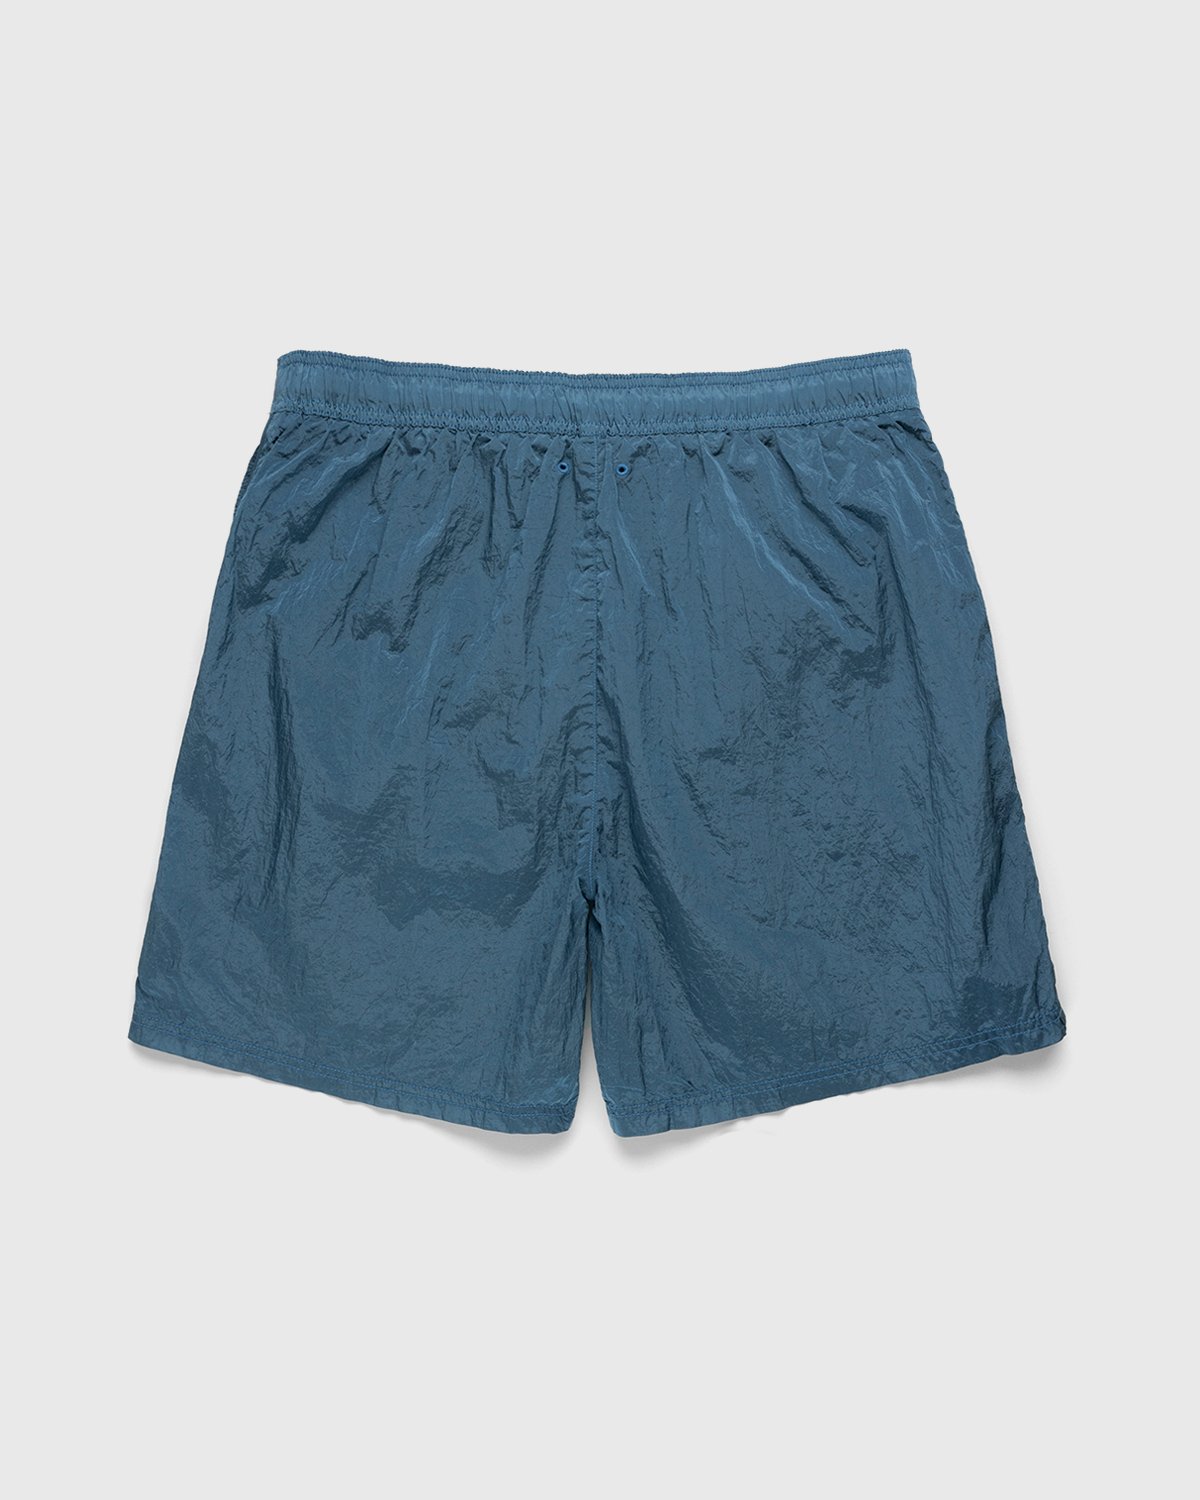 Stone Island - B0243 Nylon Metal Swim Shorts Mid Blue - Clothing - Blue - Image 2